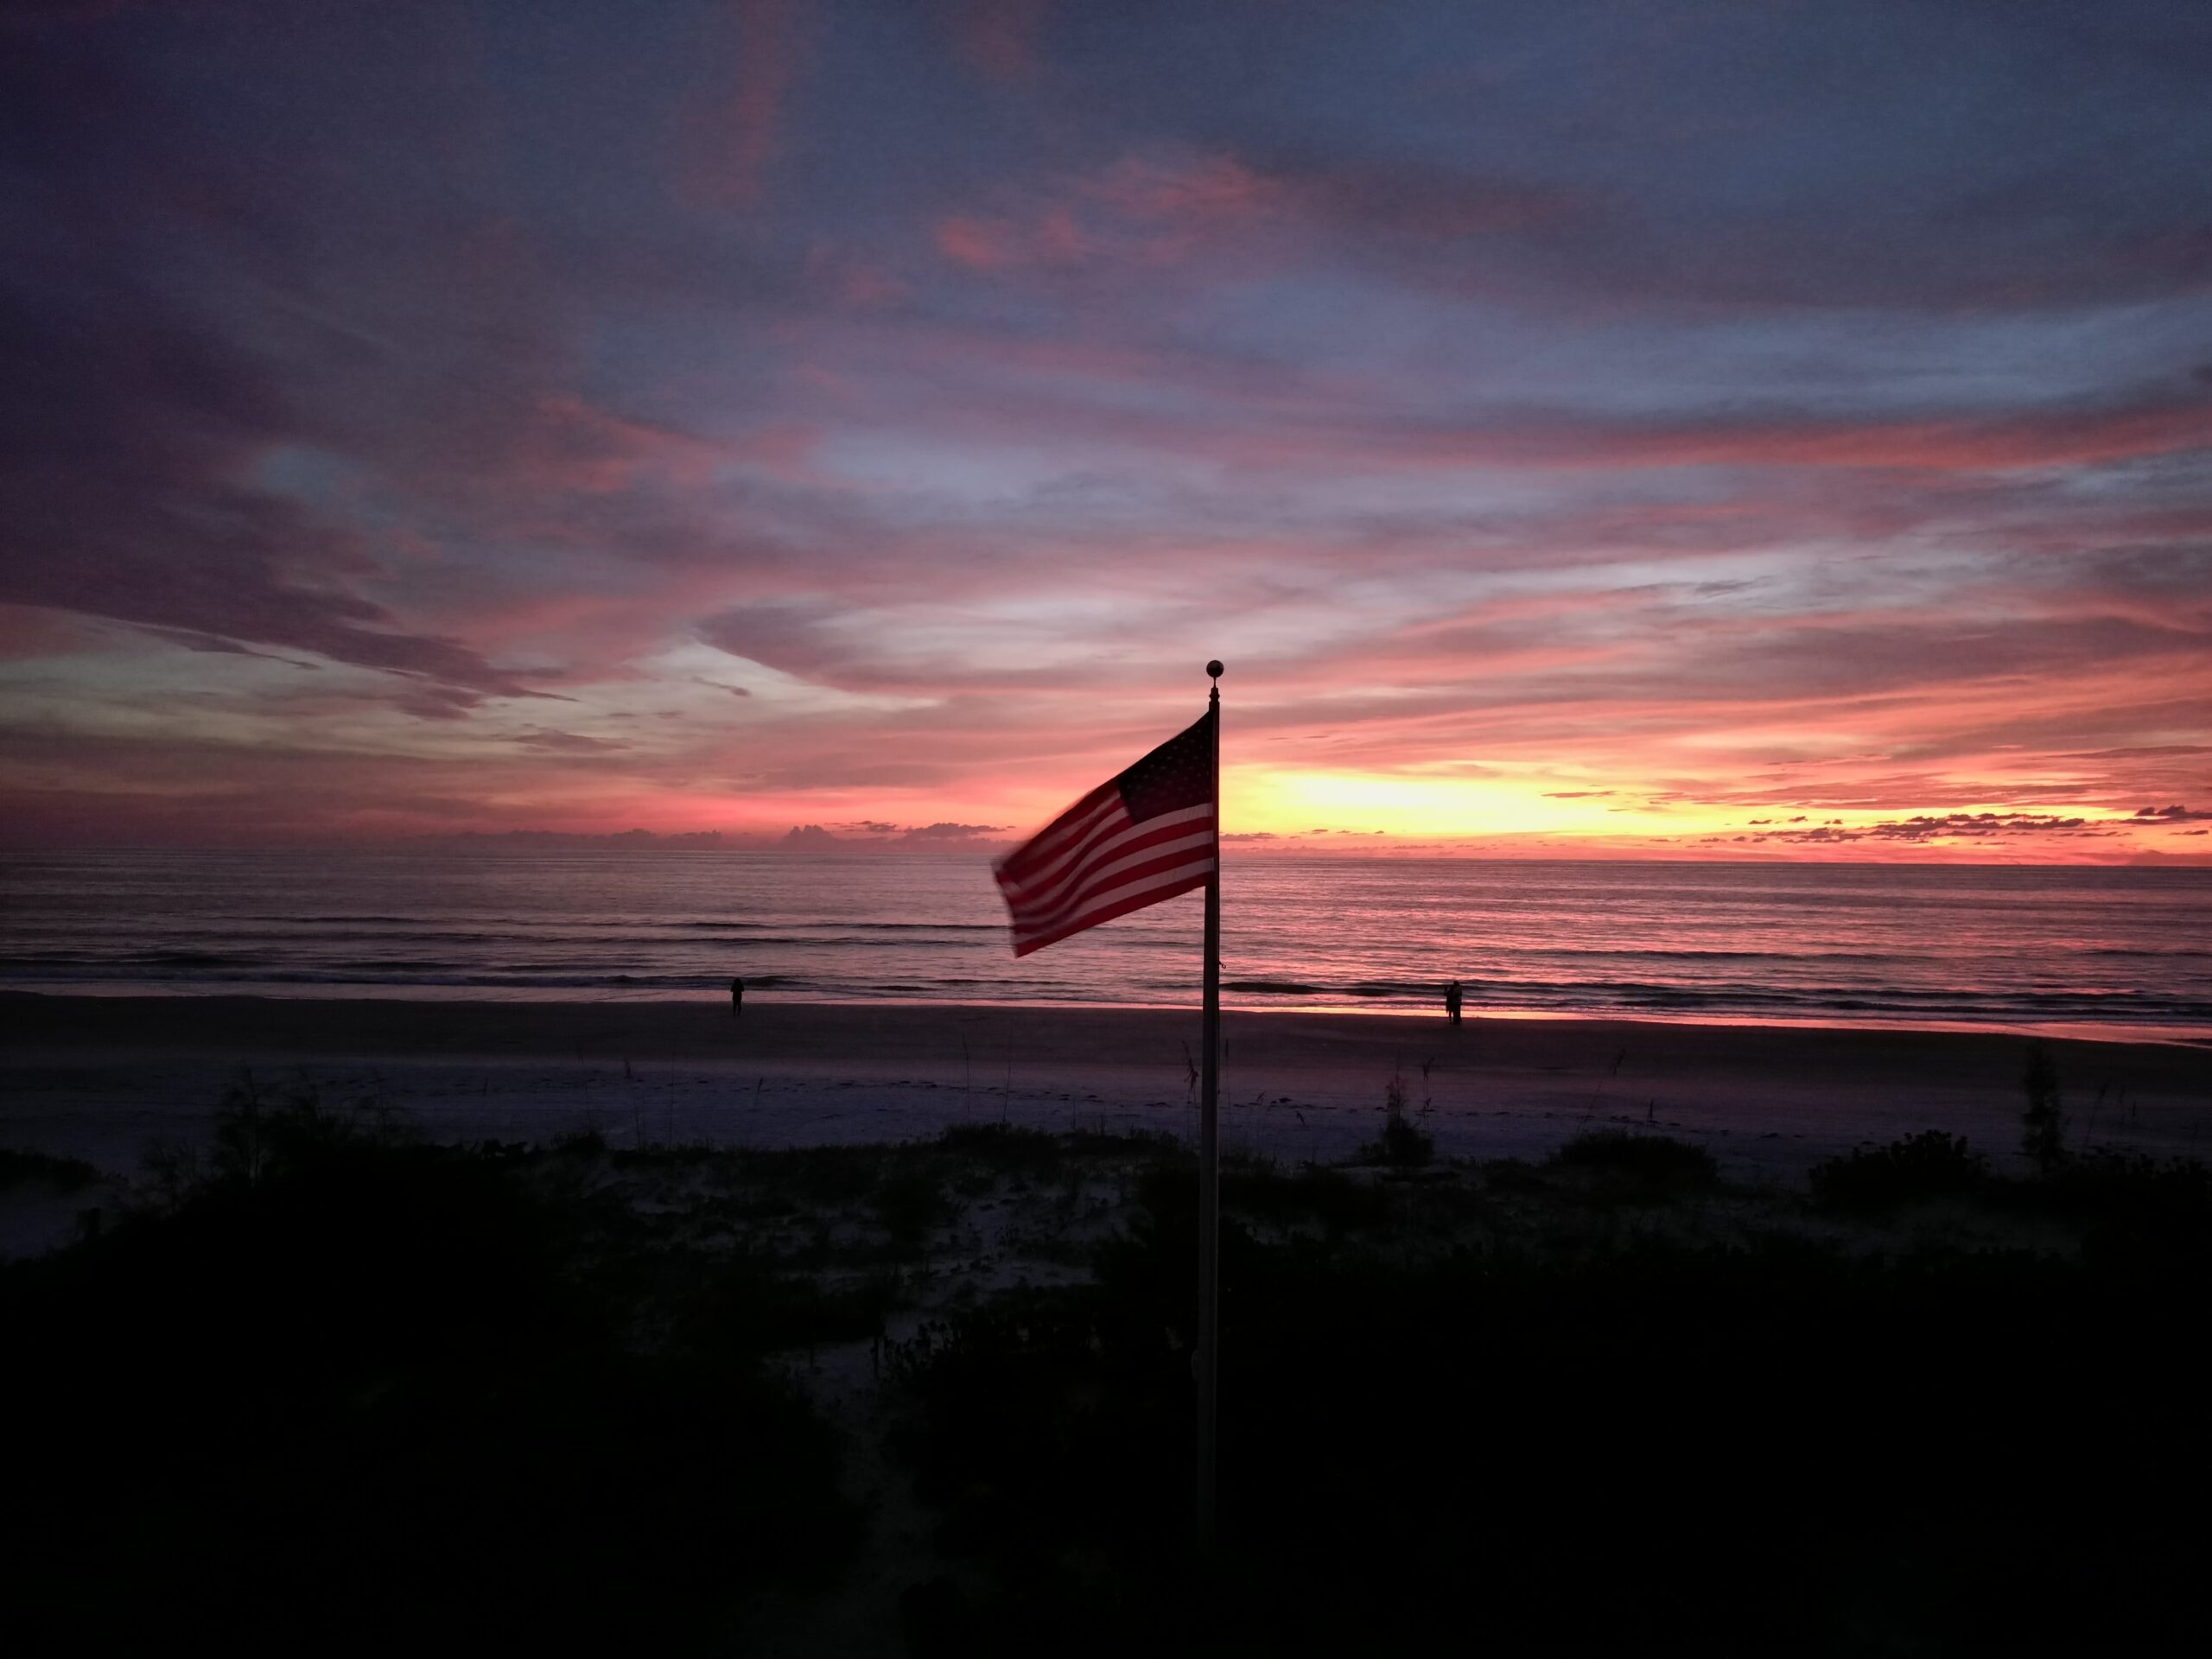 An American flag planted on a beach shore